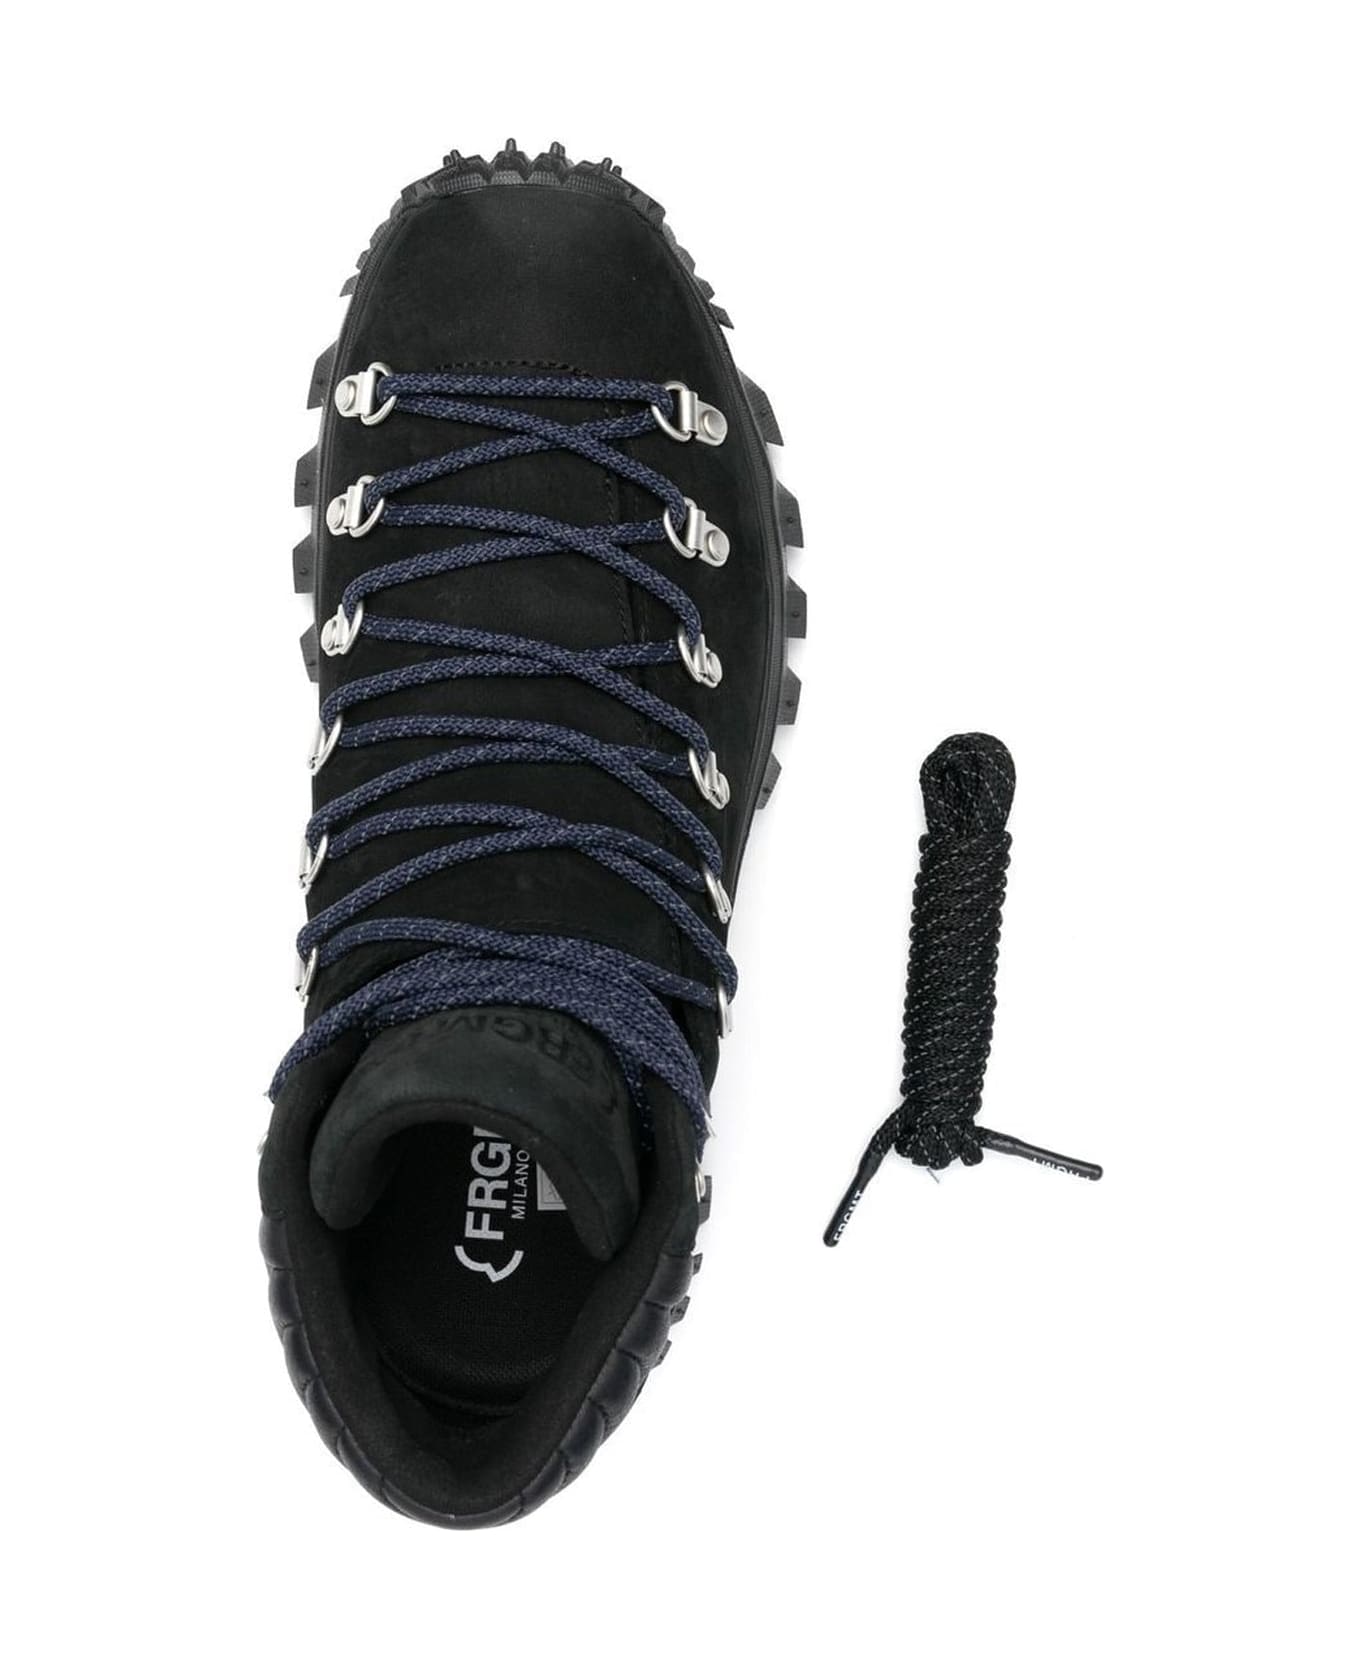 Moncler Trailgrip High Gtx Boots - Black